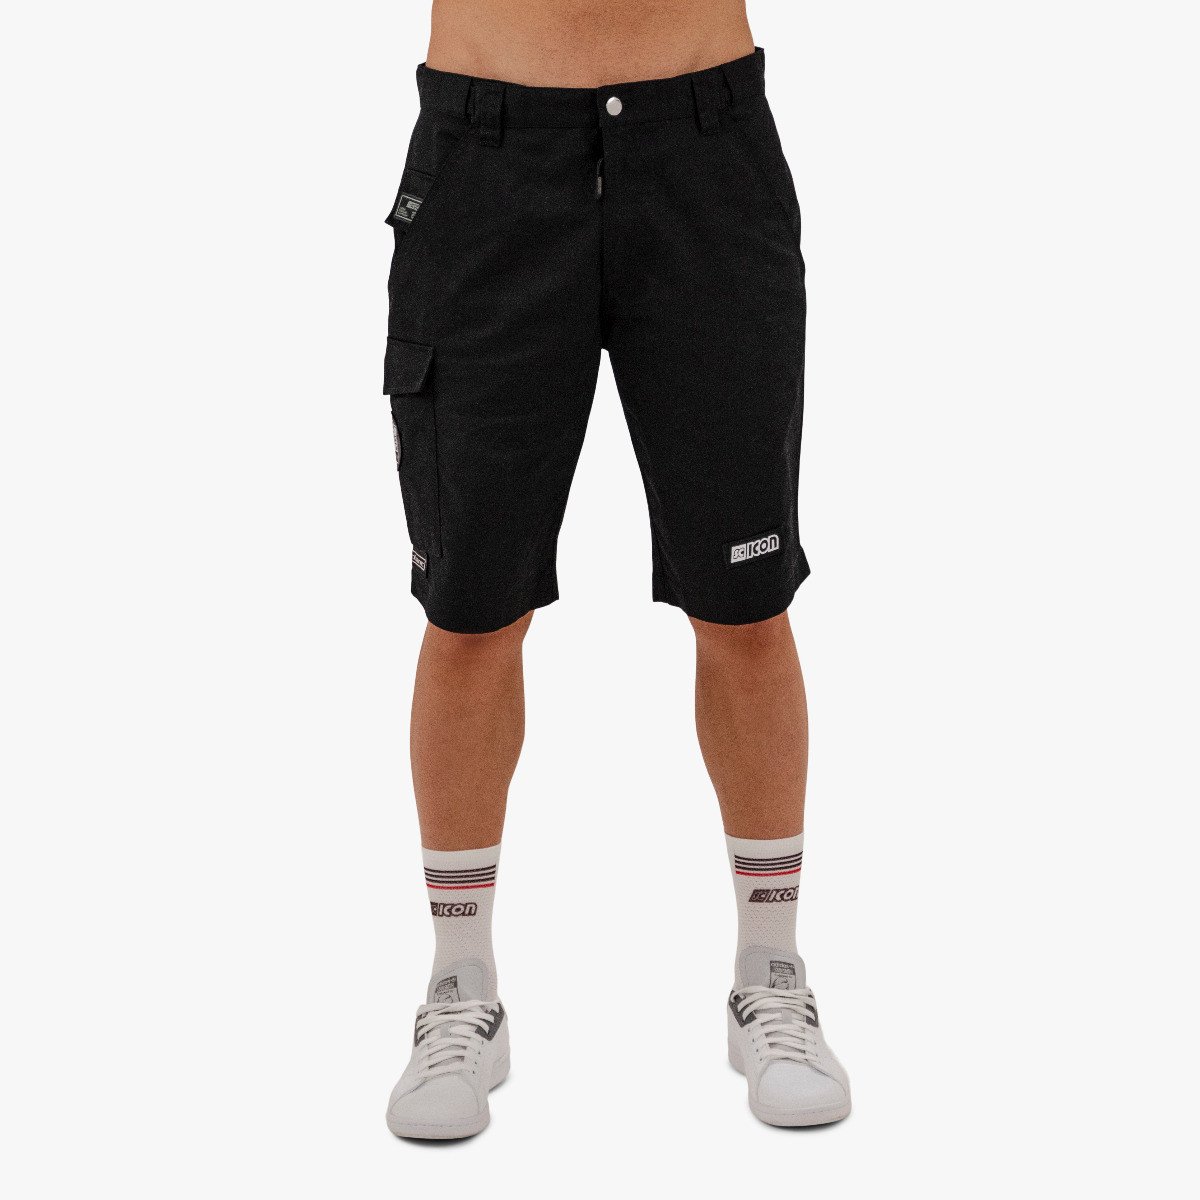 scicon bermuda shorts black sh54002